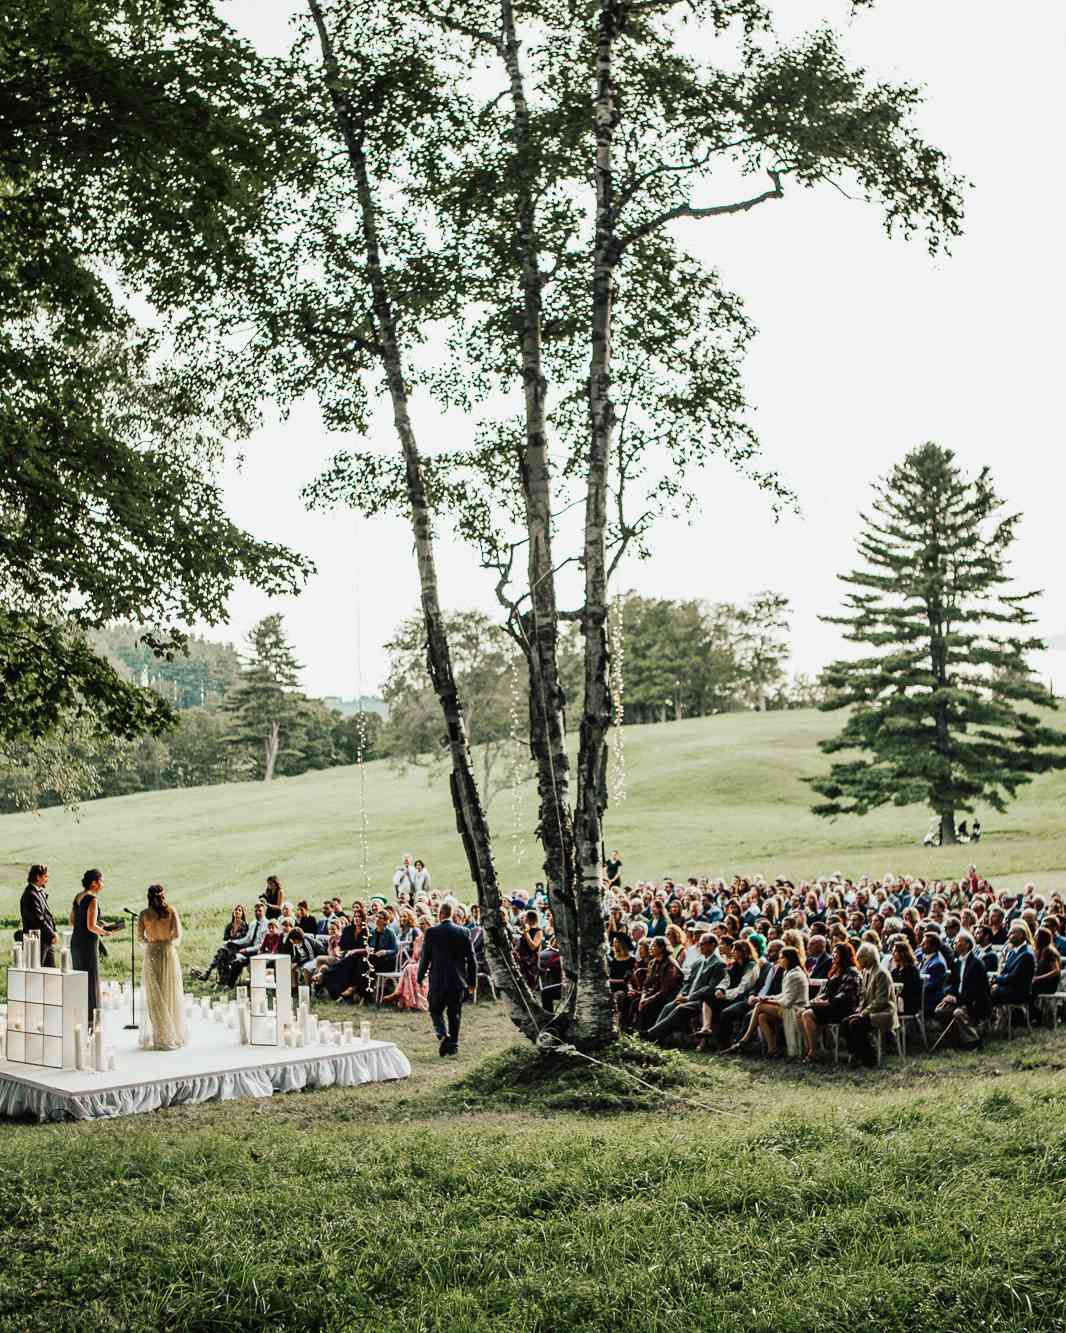 birch grove outdoor wedding ceremony space